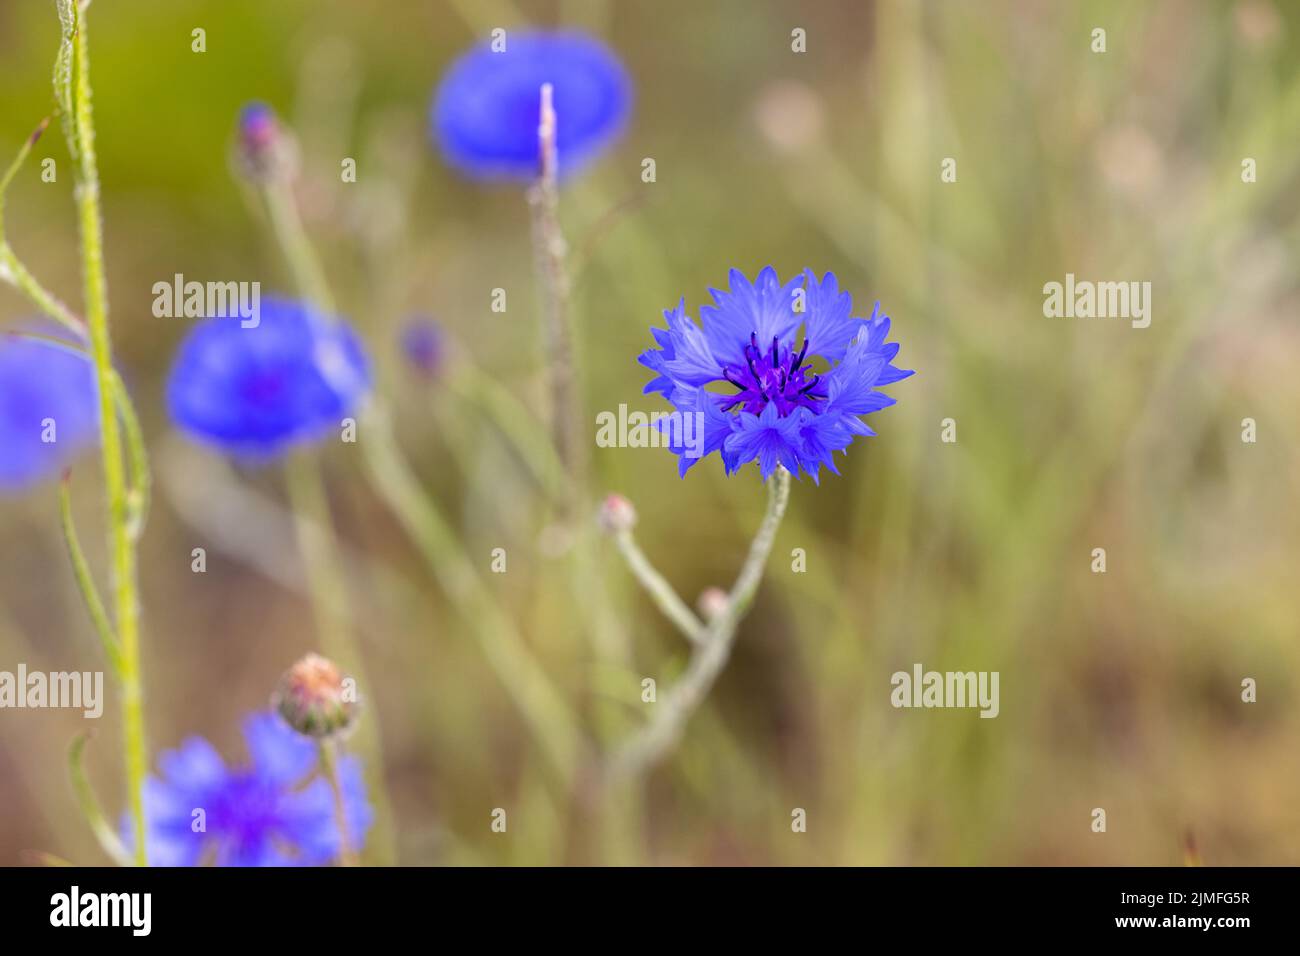 Bluebottle, Boutonniere Flower, Hurtsickle, Cyani Flower, blue cornflower, Centaurea cyanus, standing alone among the green gras Stock Photo